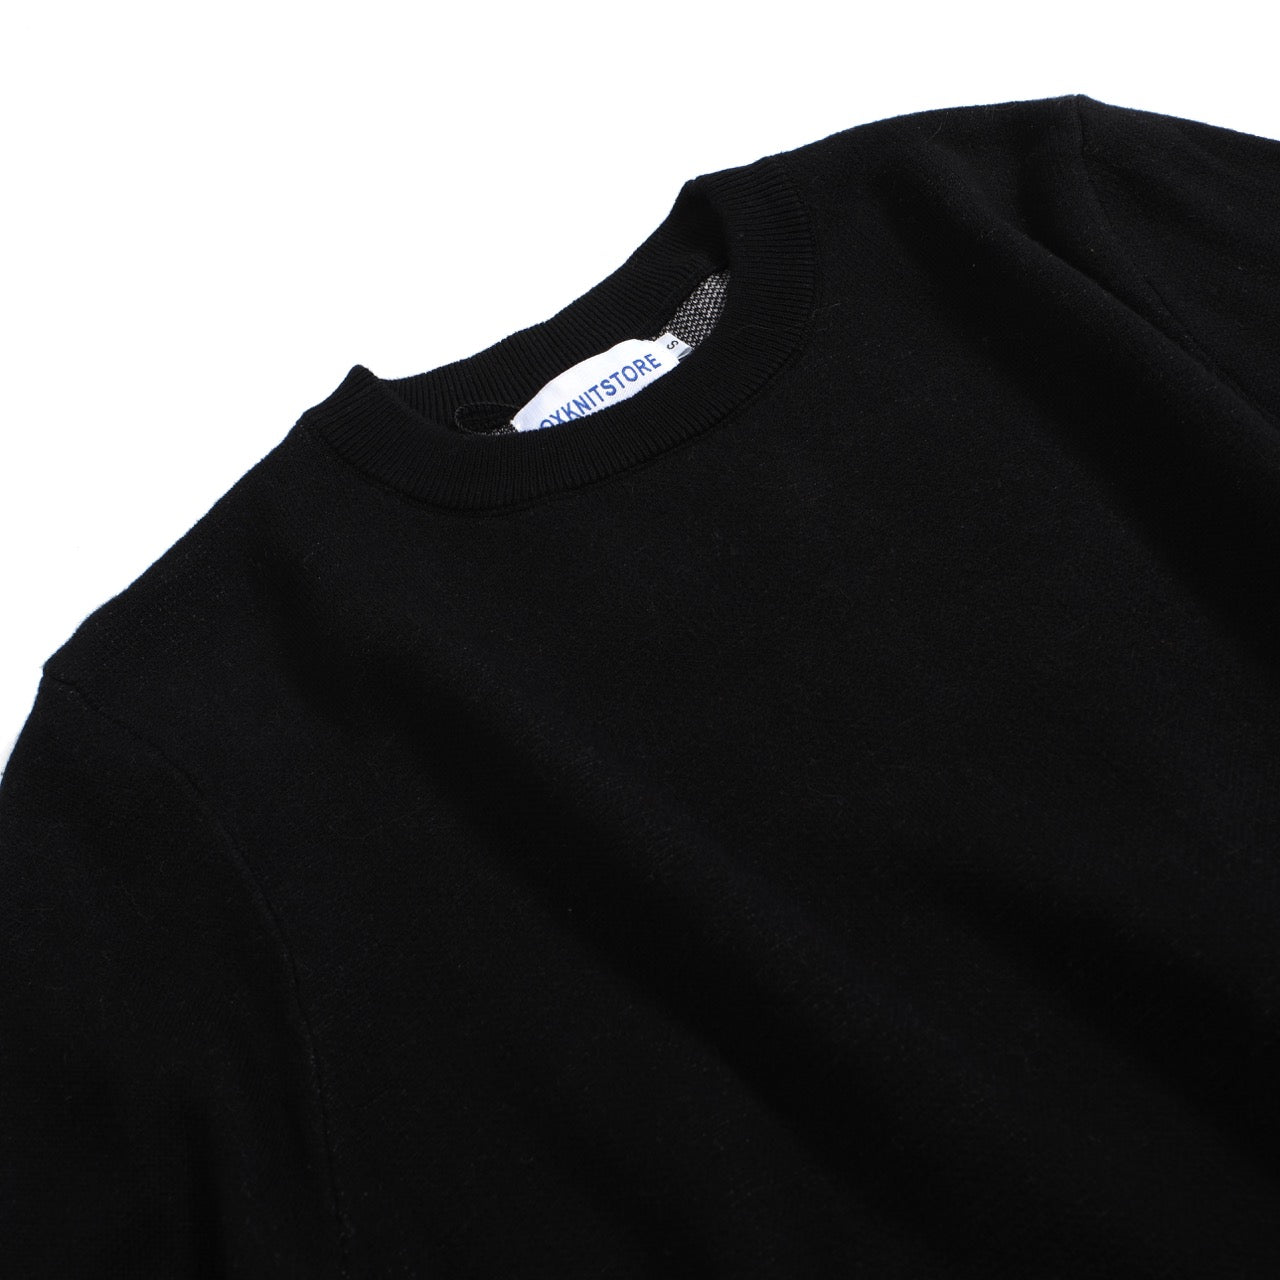 Women 1960s Retro Wave Knitwear T-shirts Black